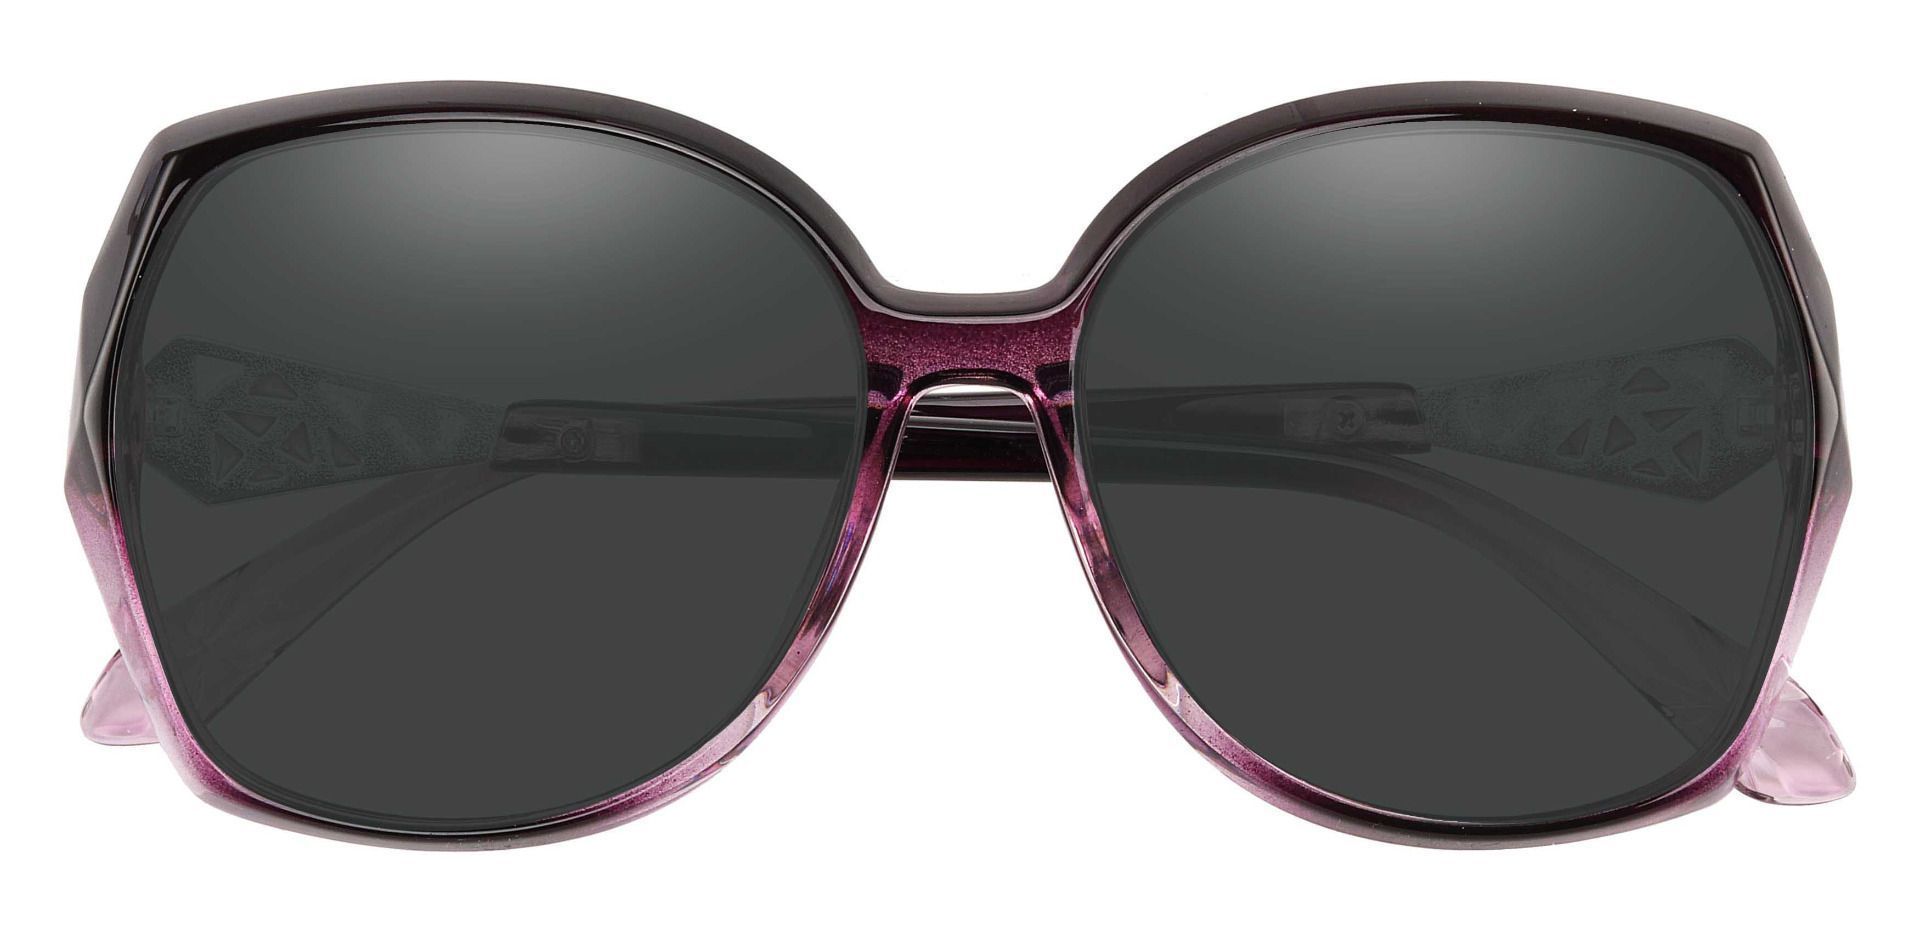 Swan Geometric Non-Rx Sunglasses - Purple Frame With Gray Lenses